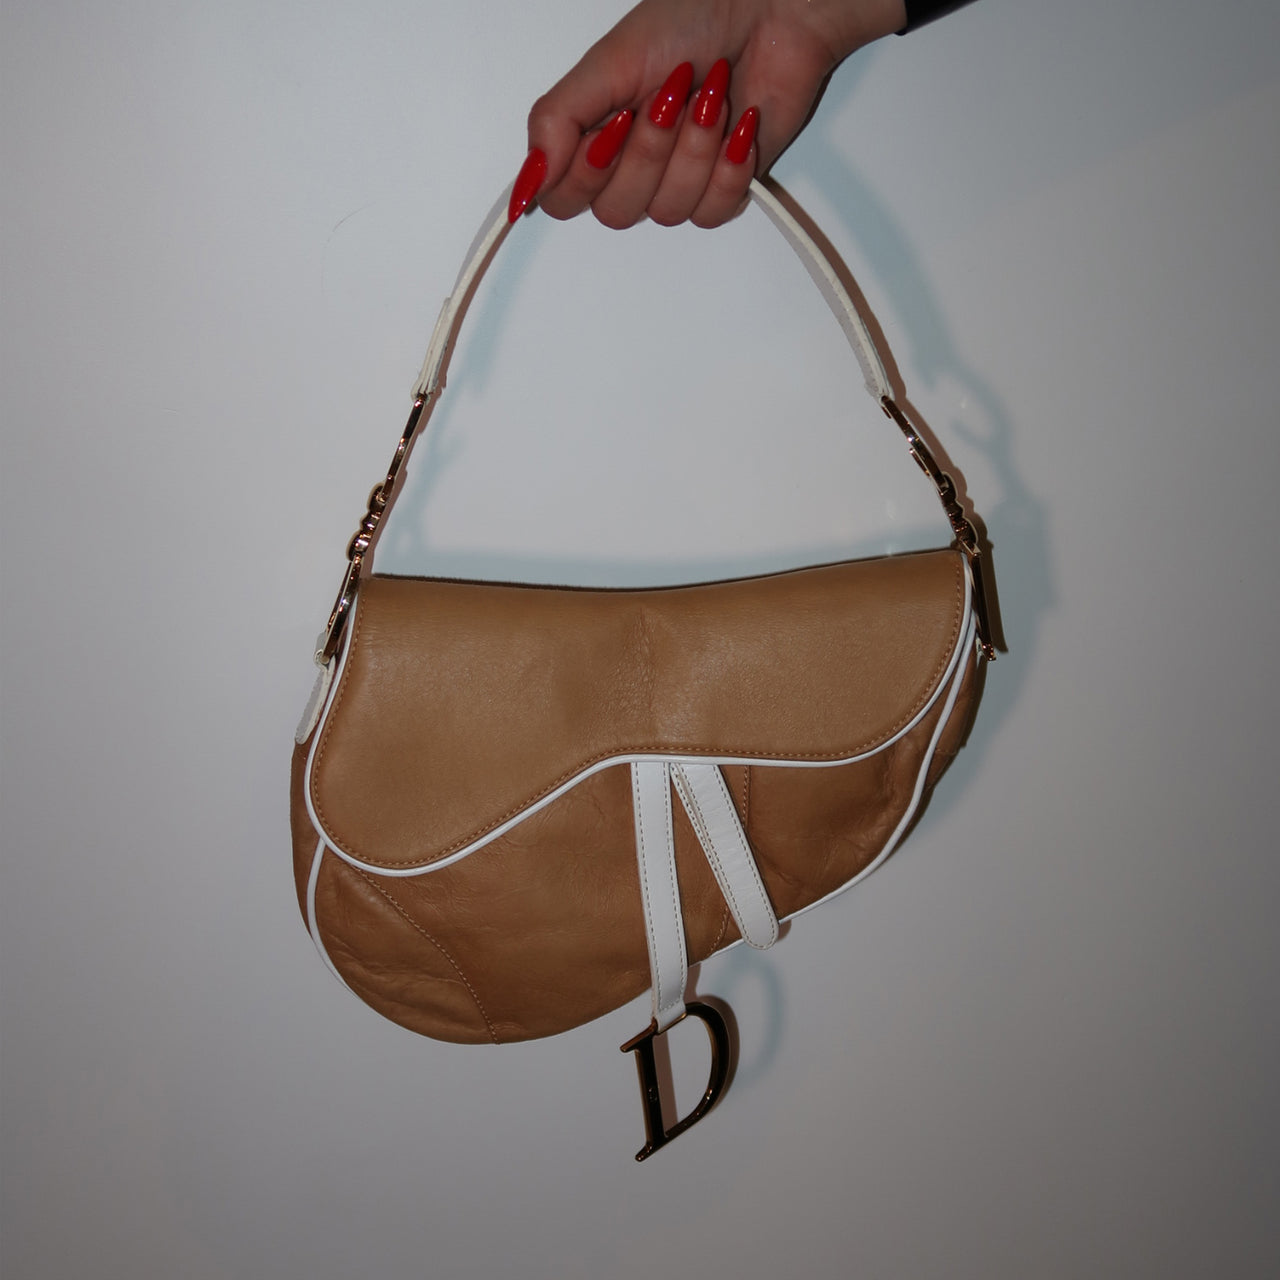 Dior 2000 Brown Saddle Bag As Seen On Carrie Bradshaw